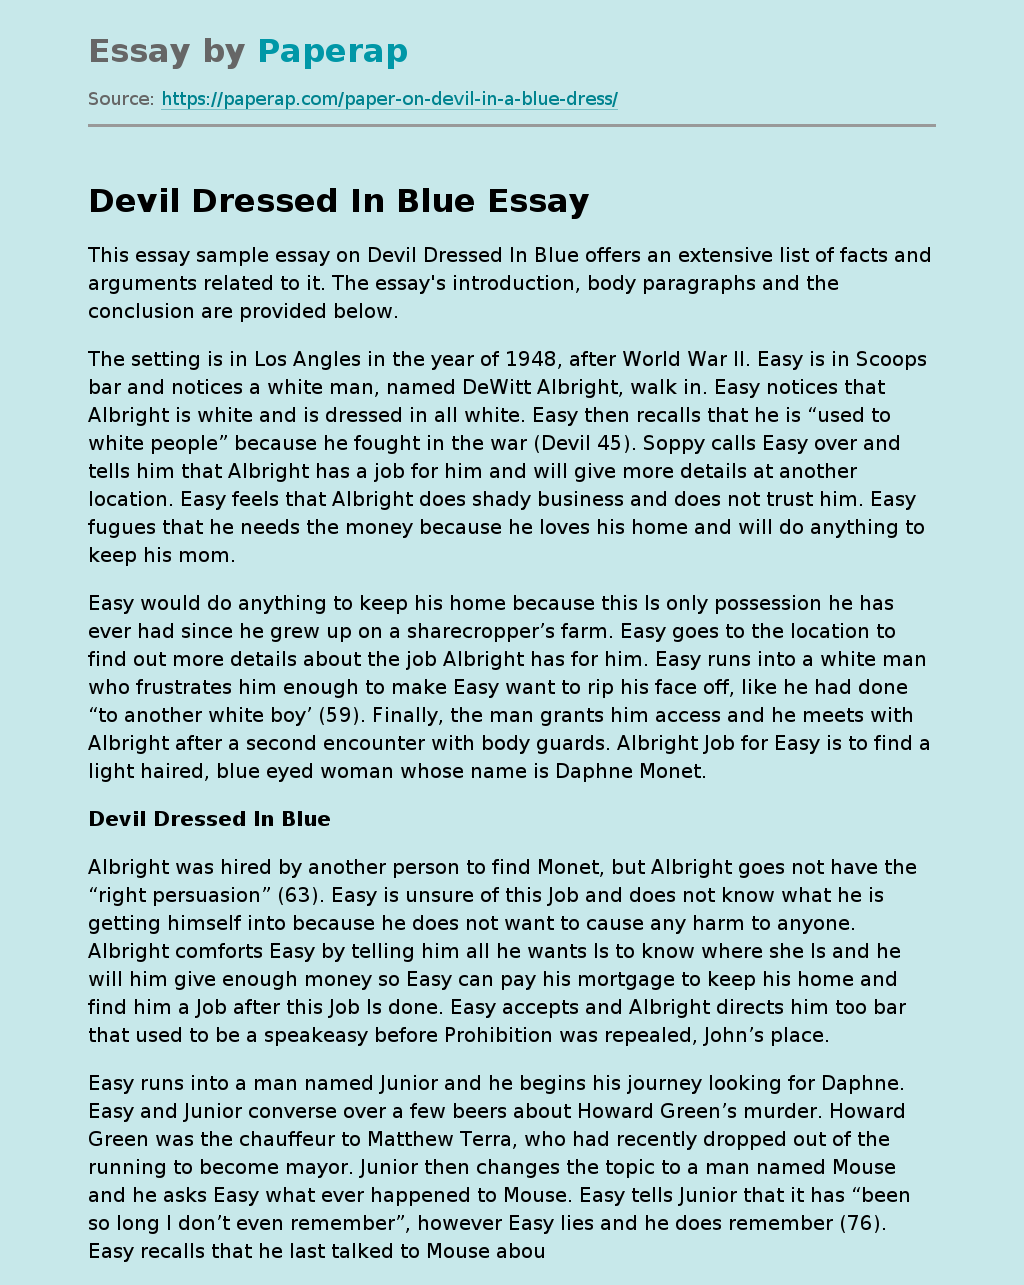 Essay Sample Essay on Devil Dressed in Blue